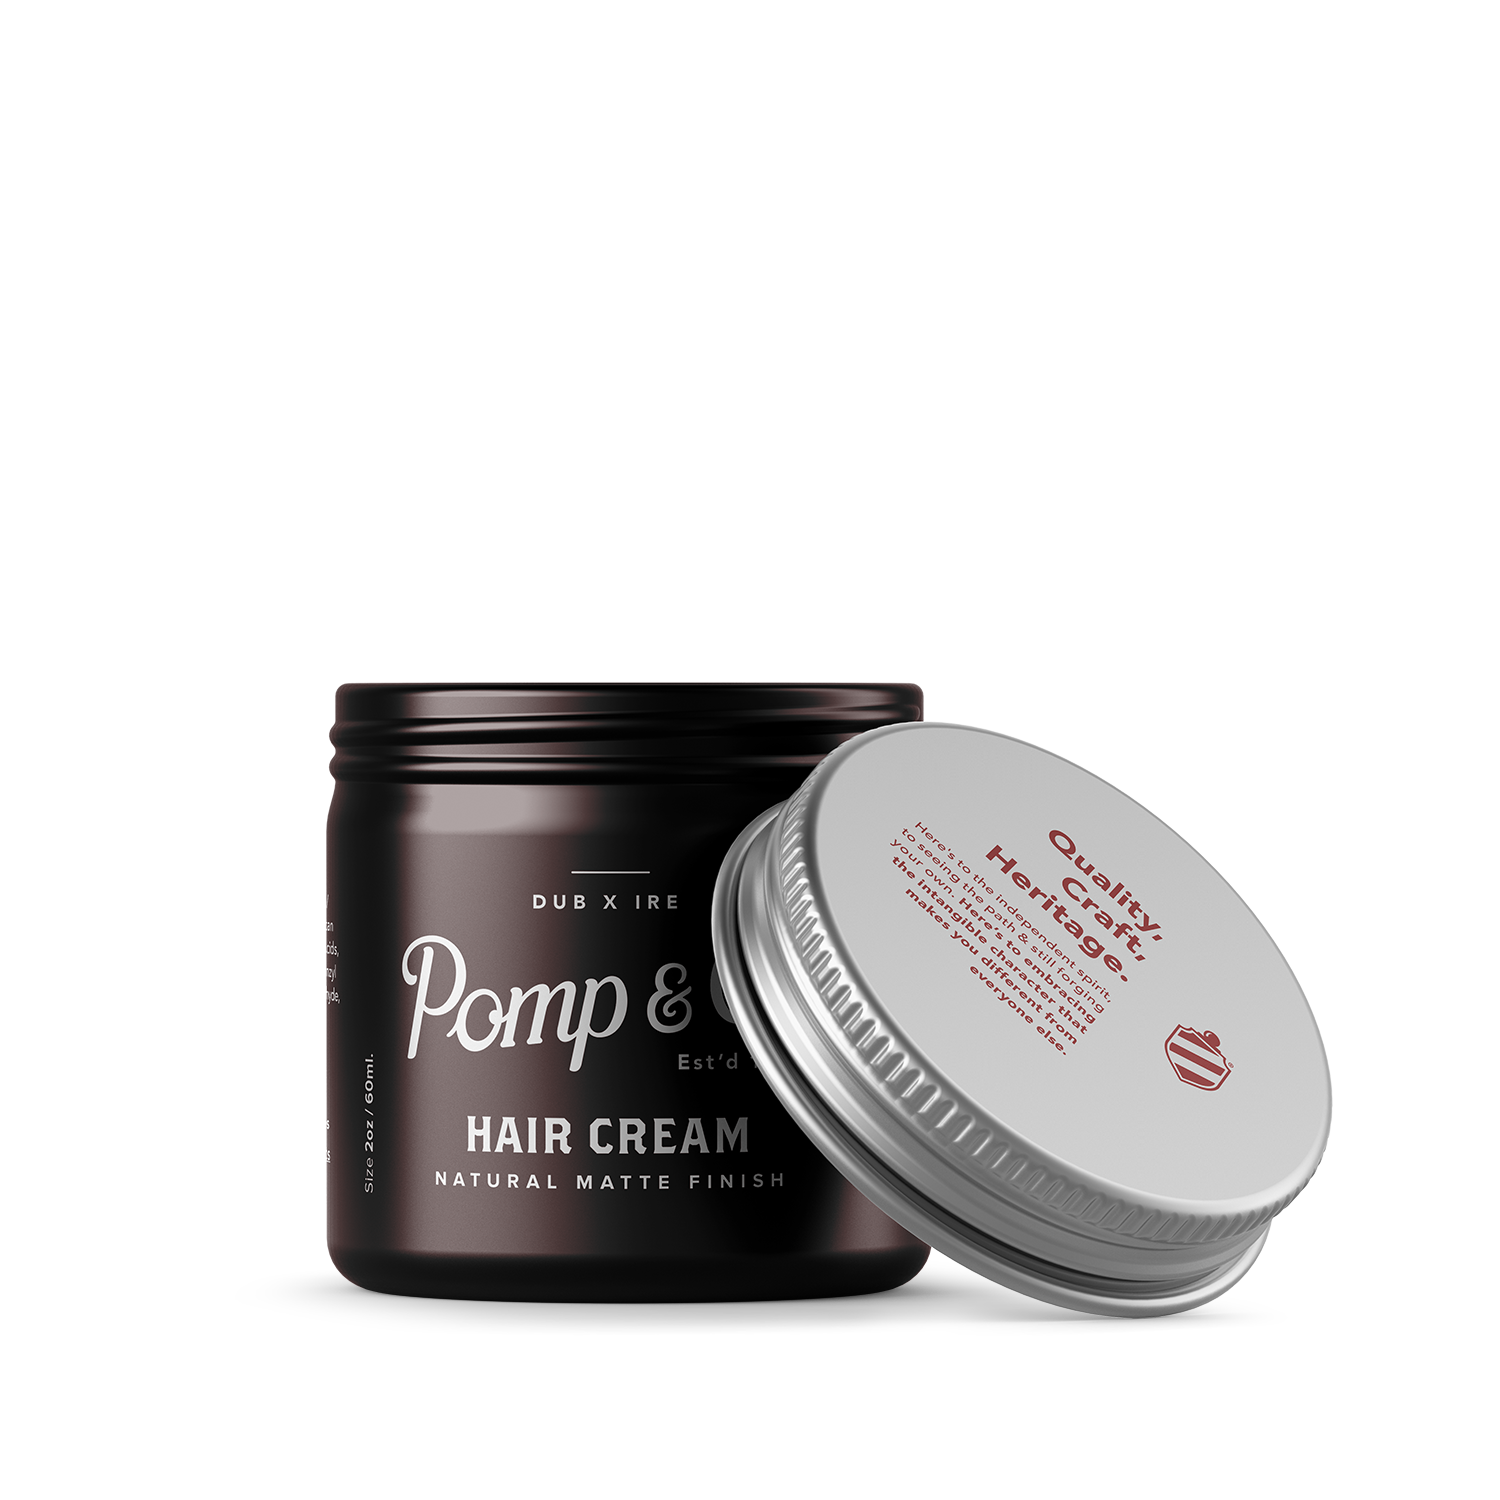 Pomp & Co's Hair Cream